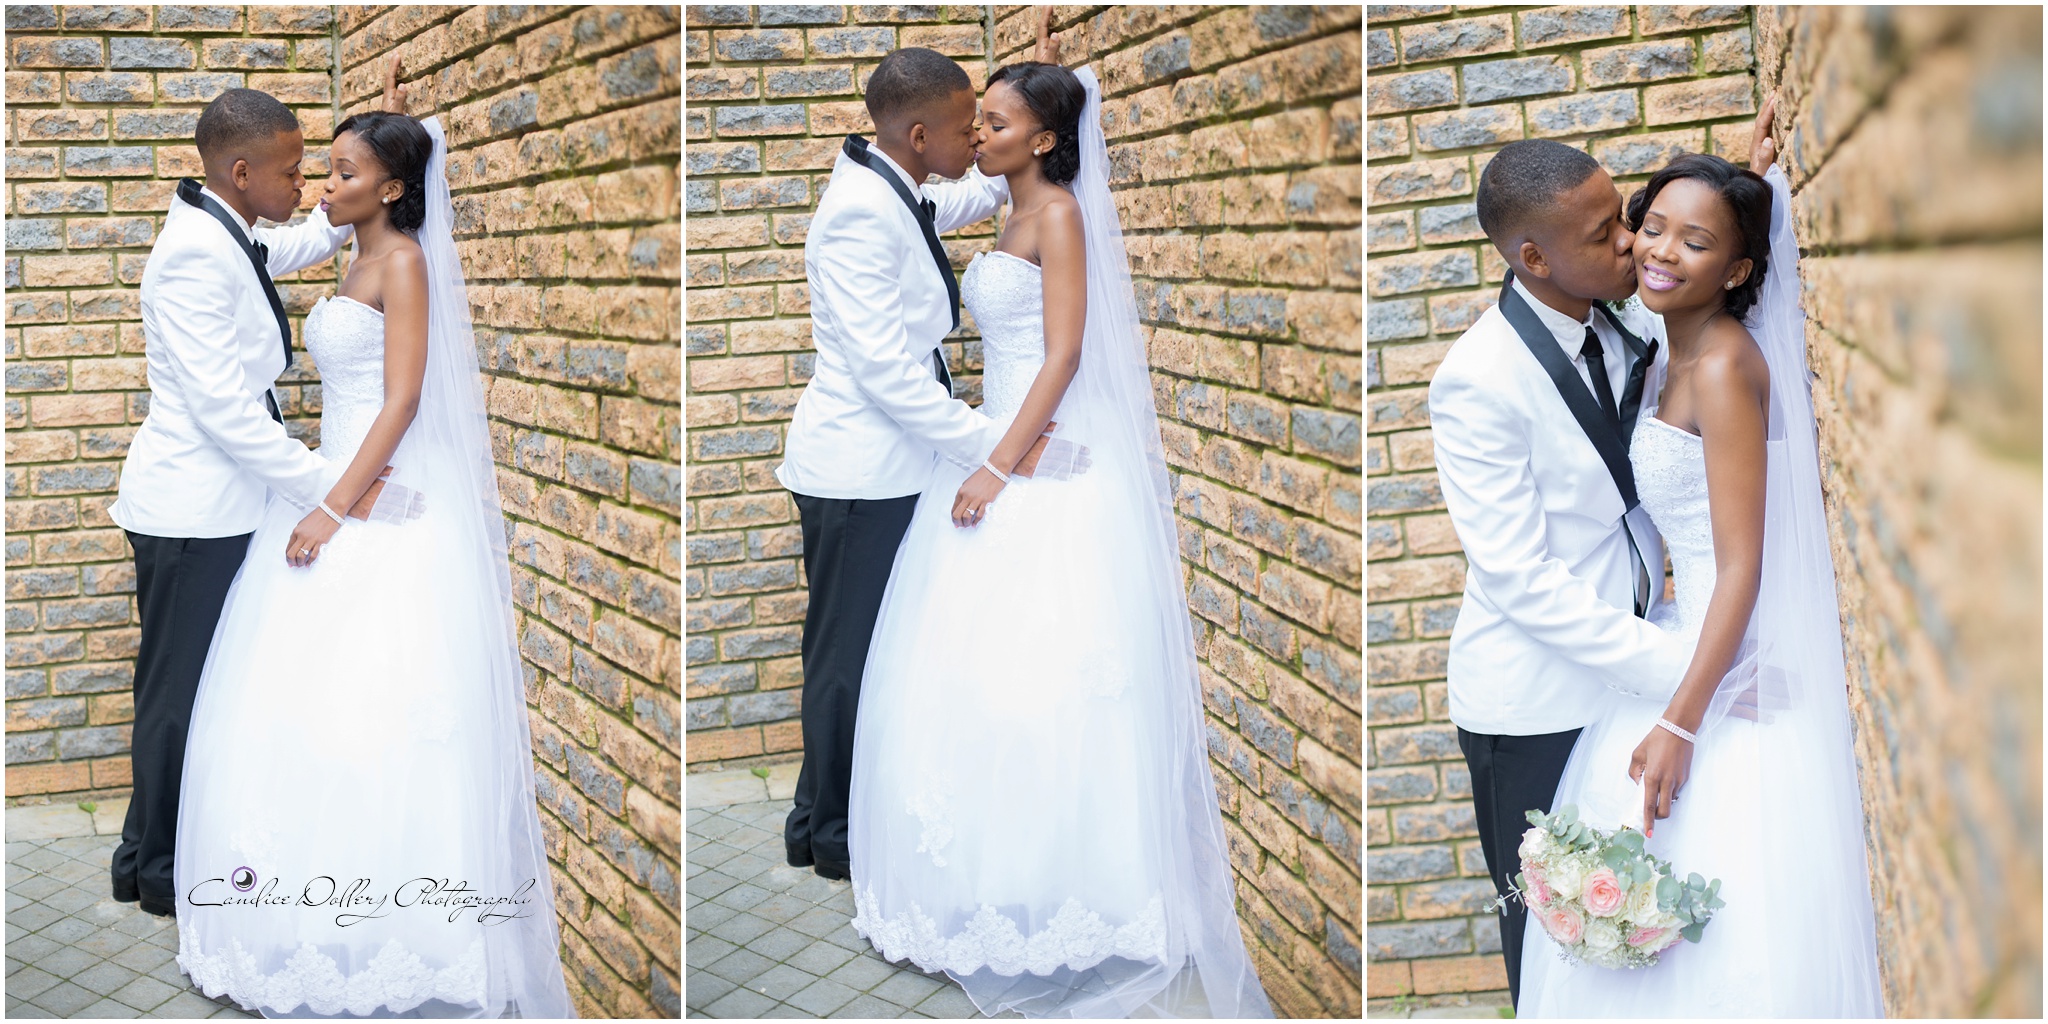 Asanda & Bonga's Wedding - Candice Dollery Photography_8255